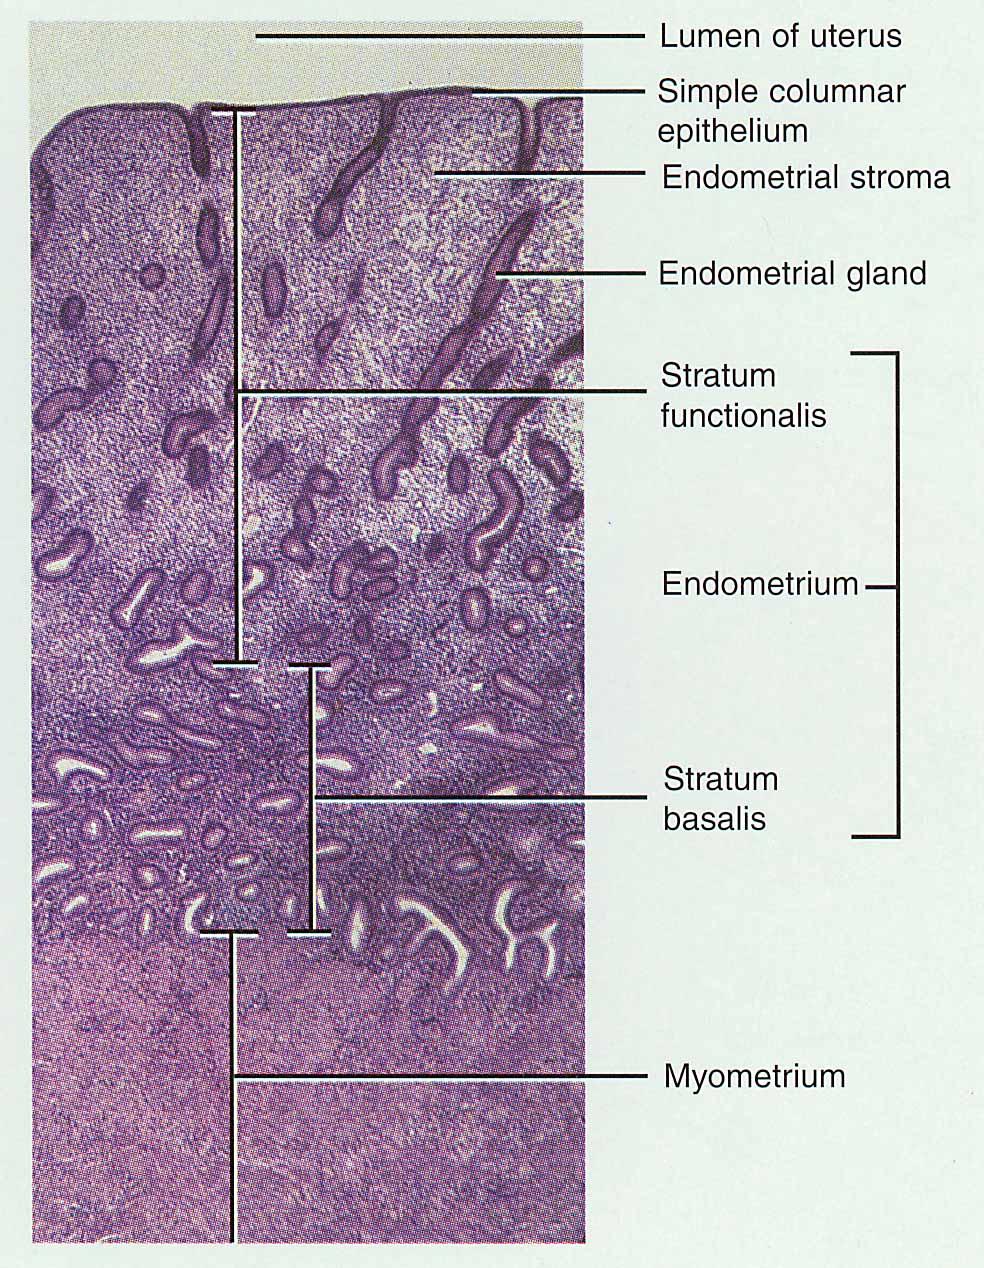 Histology of the Uterus 3 Layers perimetrium Endometrium simple columnar epithelium and a stroma of